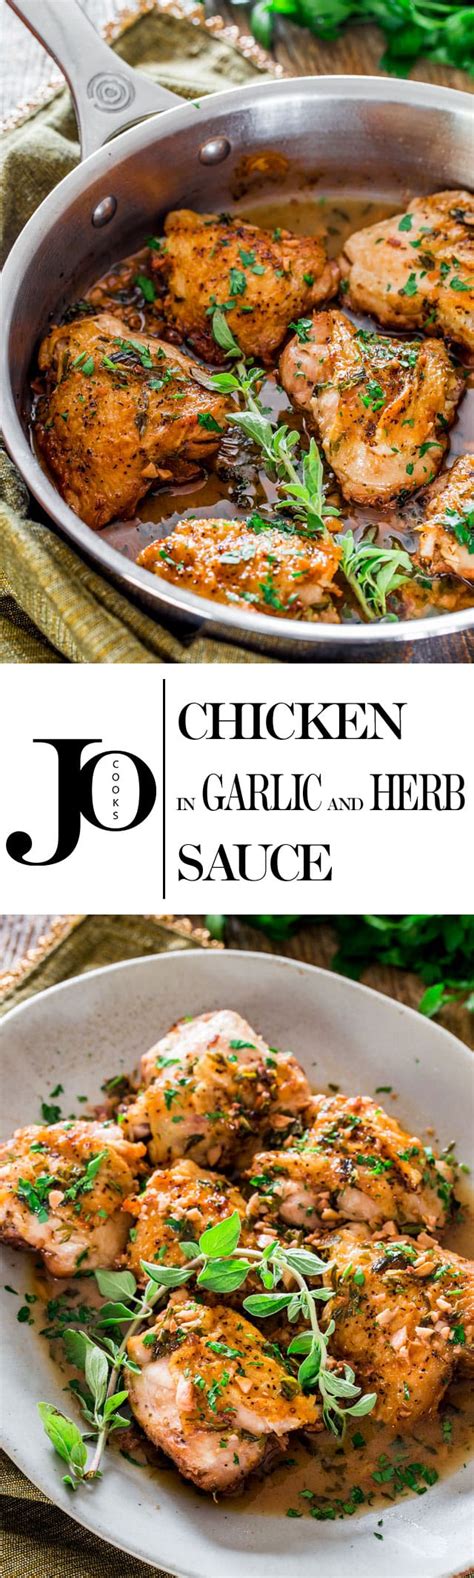 chicken-with-garlic-herb-sauce-jo-cooks image